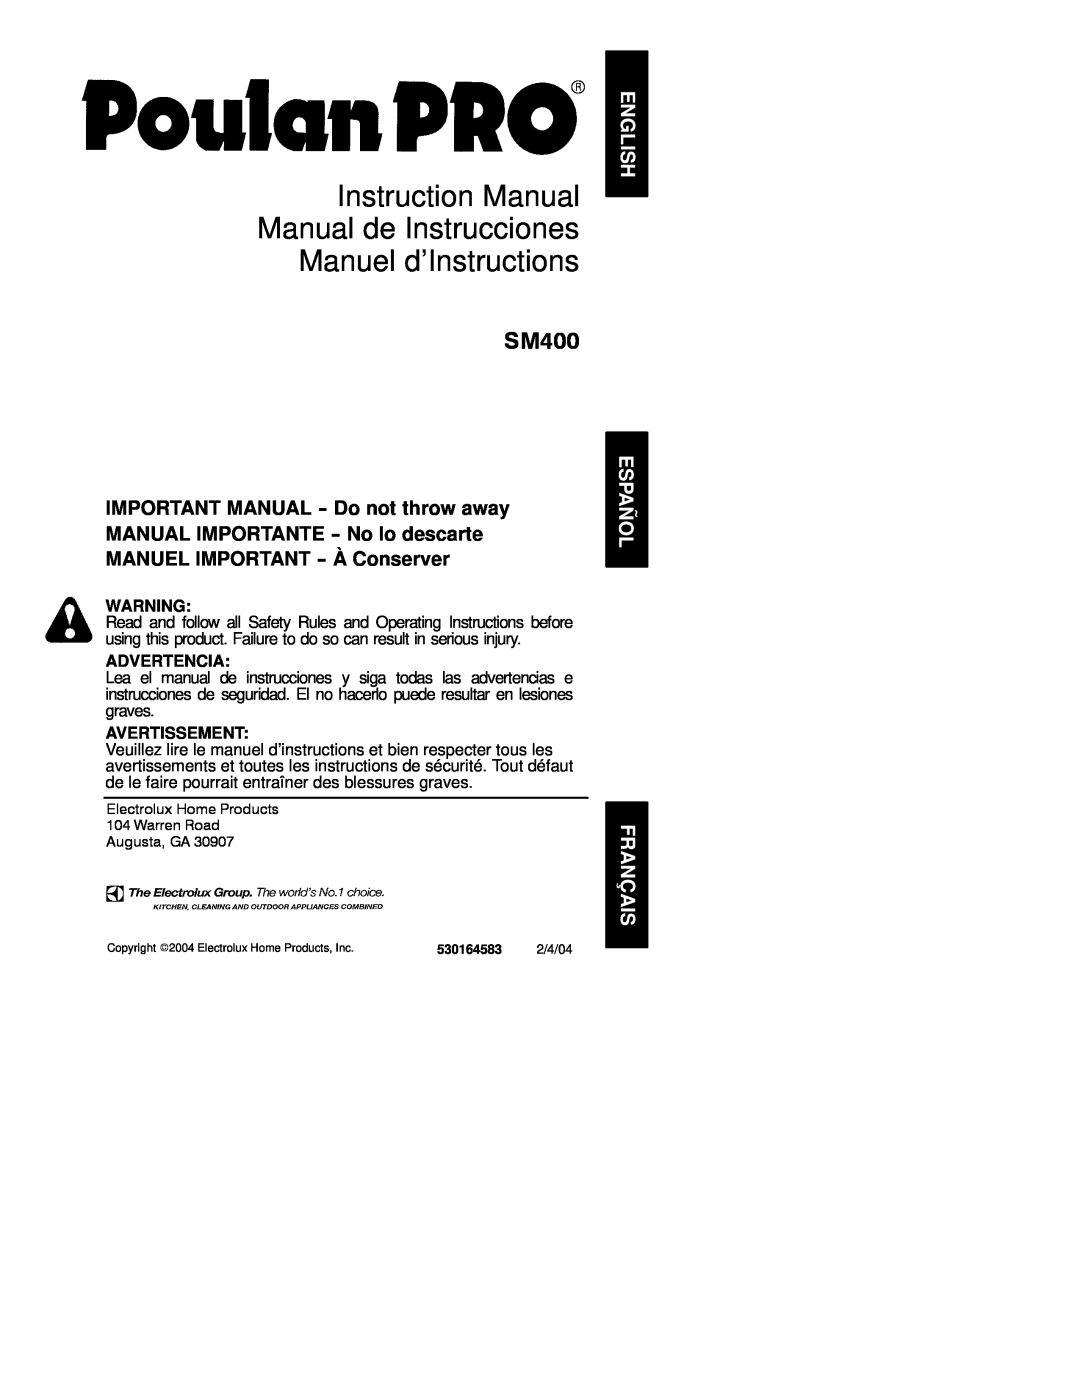 Poulan 530164583 instruction manual SM400, Advertencia, Avertissement 